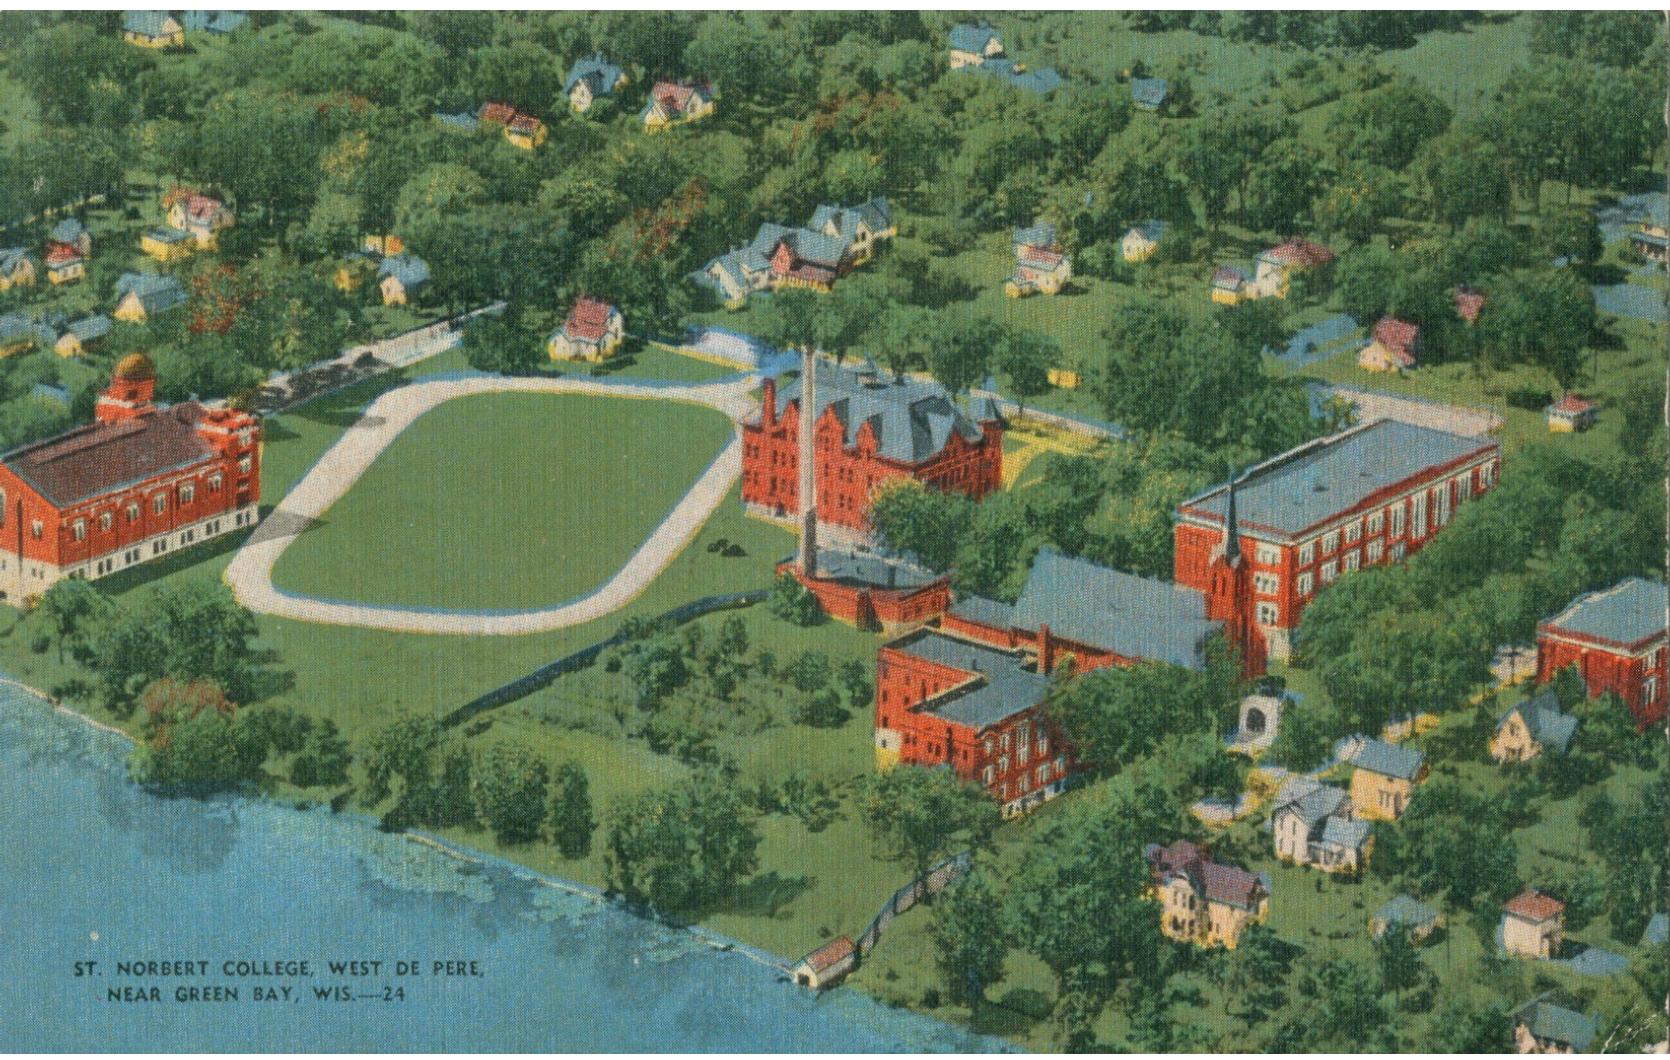 St. Norbert College, aerial